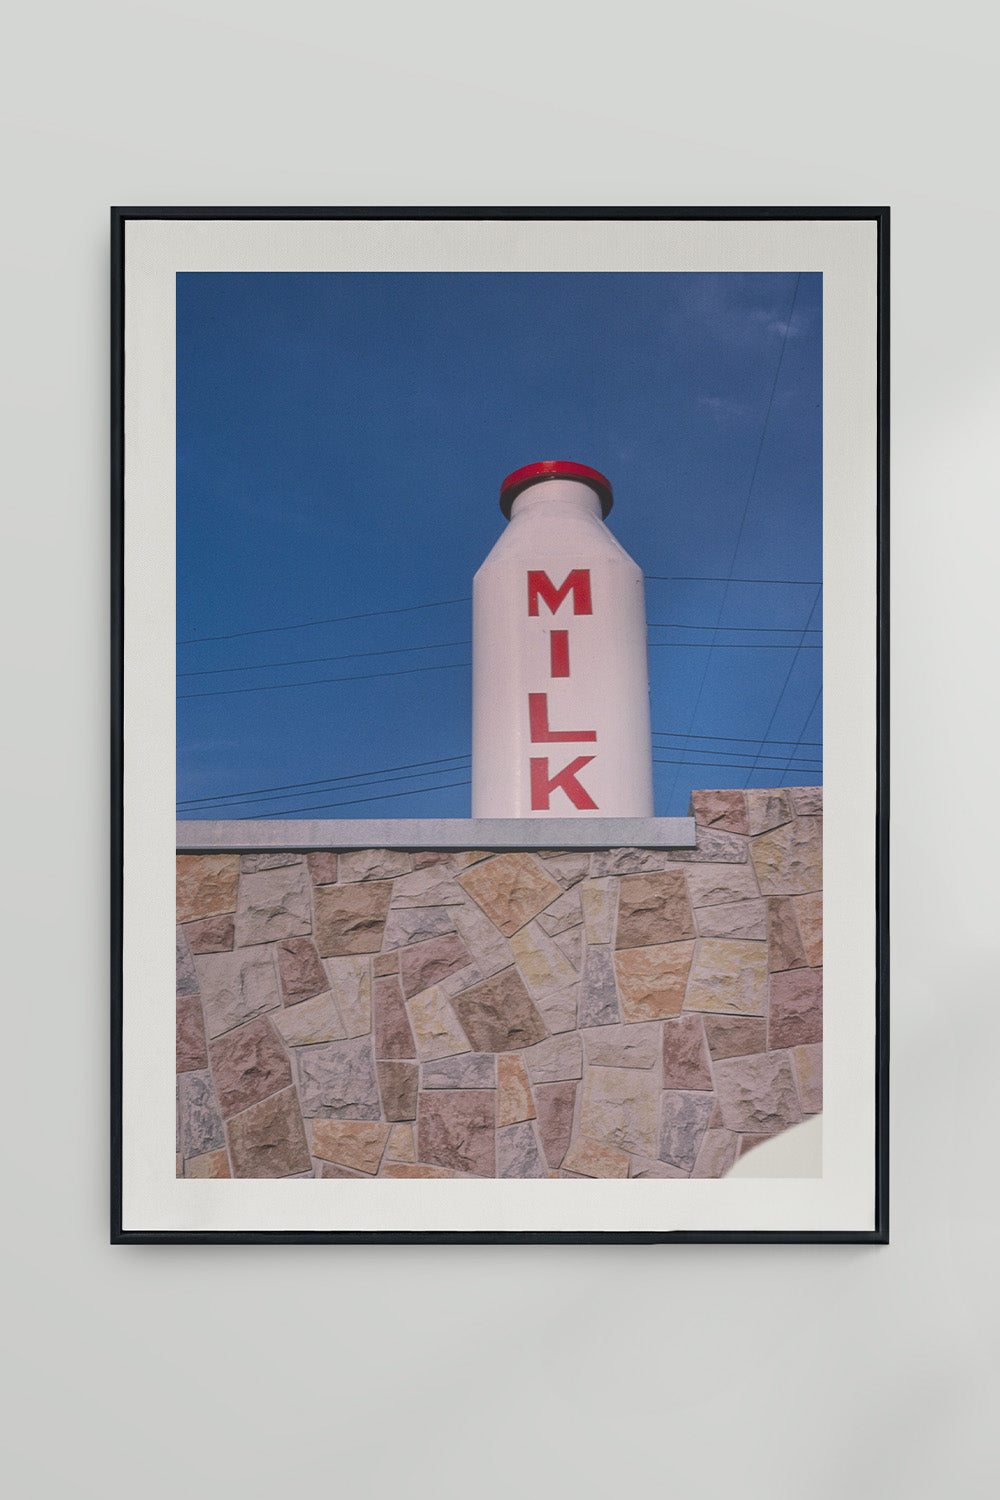 John Margolies' photograph of Milk Bottle roadside attraction against a bright blue sky.